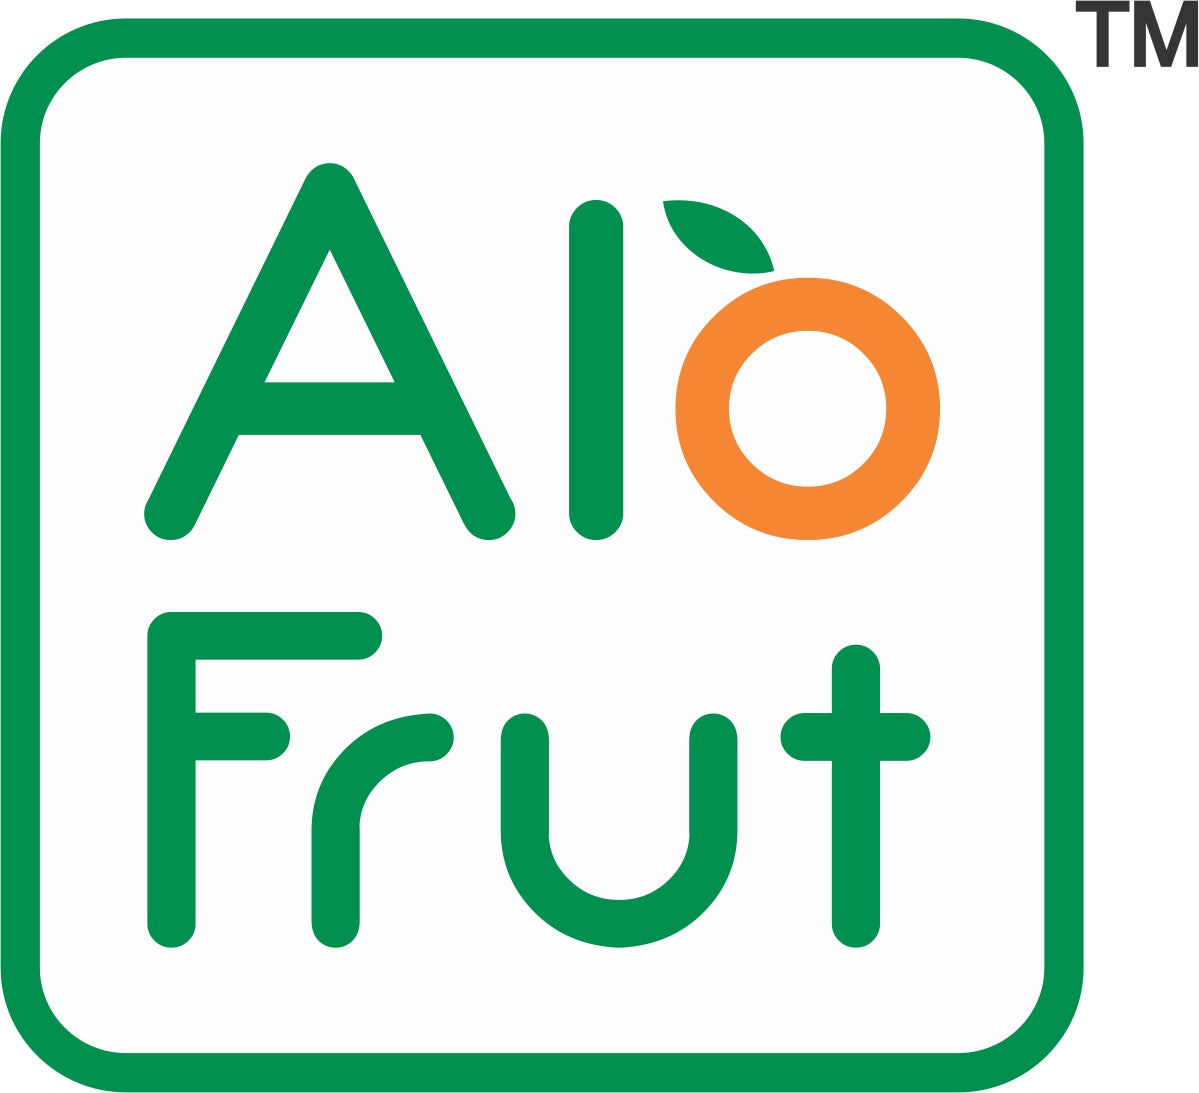 Alo Frut Apple Aloevera Juice 300ml  (Pack of 24)